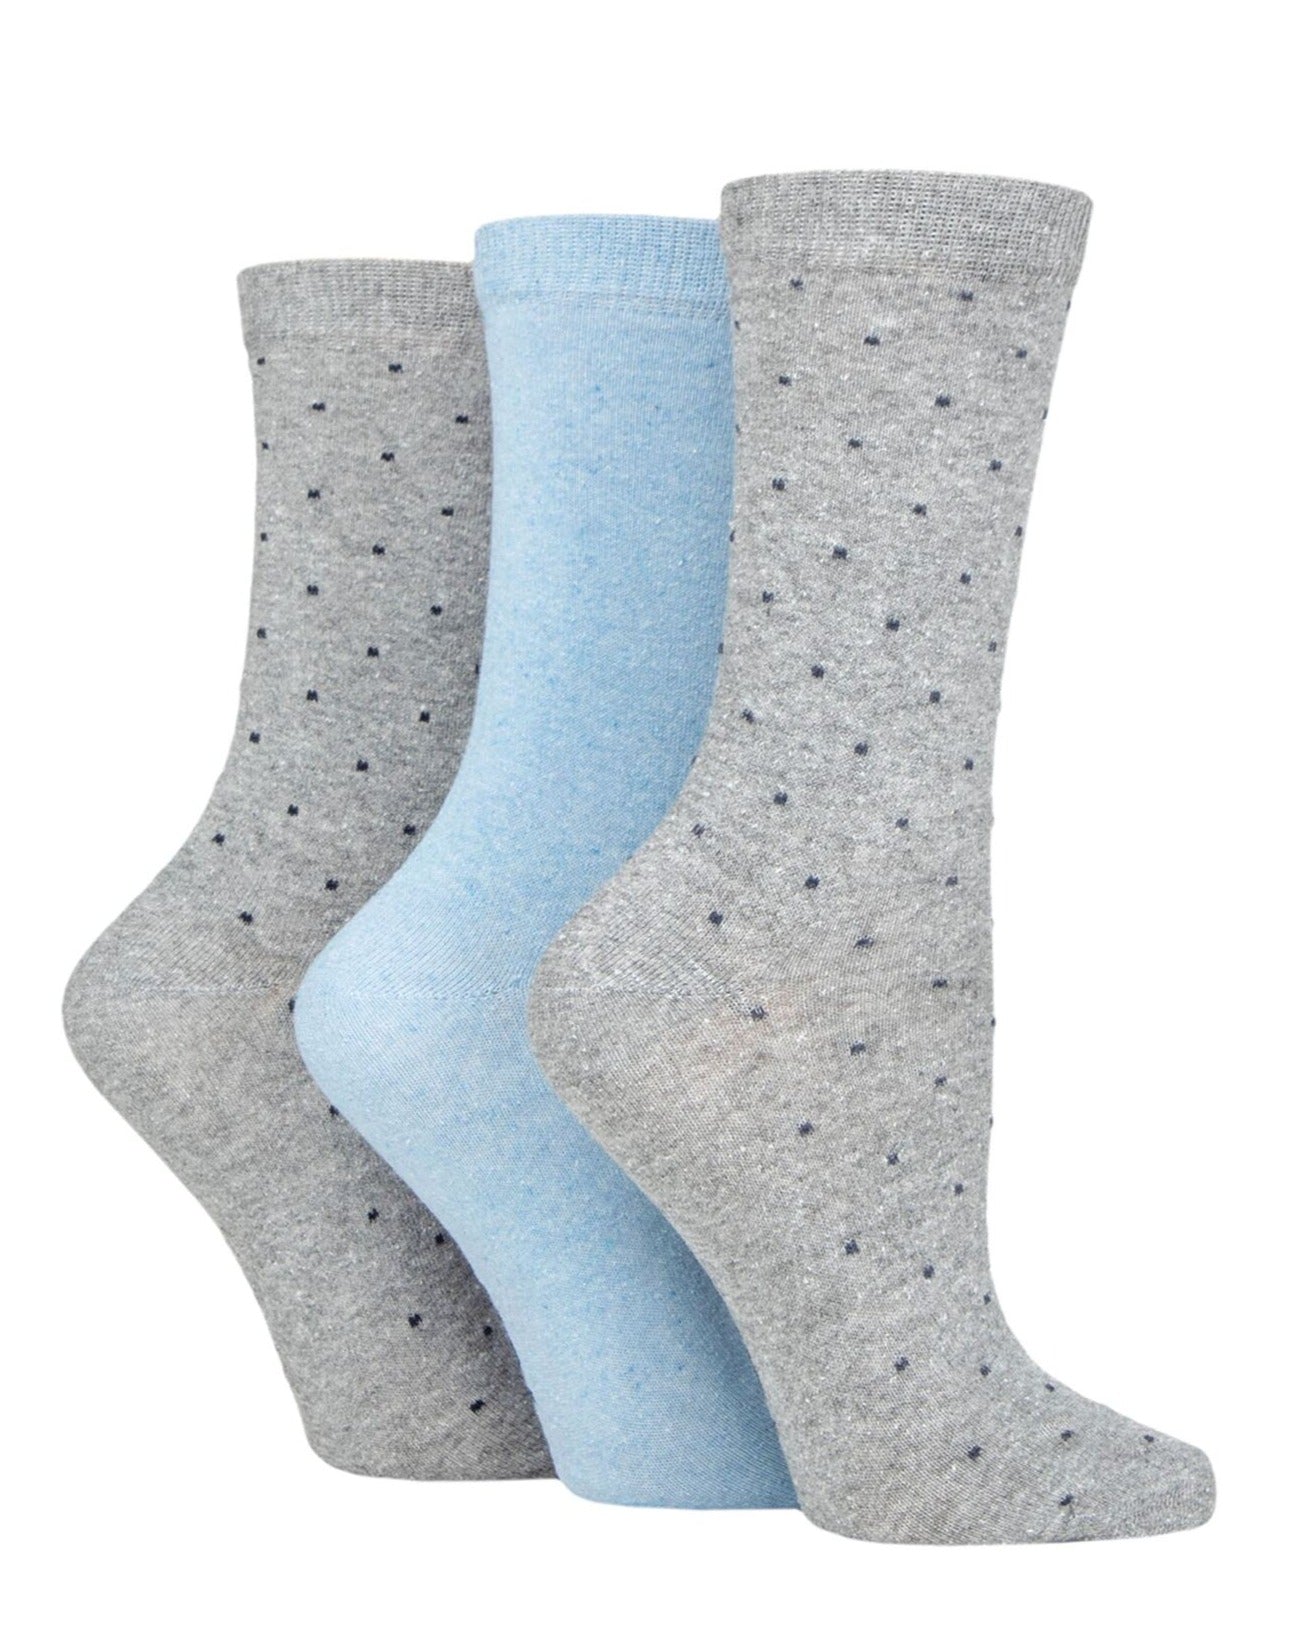 TORE 3Pk 100% Recycled Fashion Pin Dots Socks-Women's